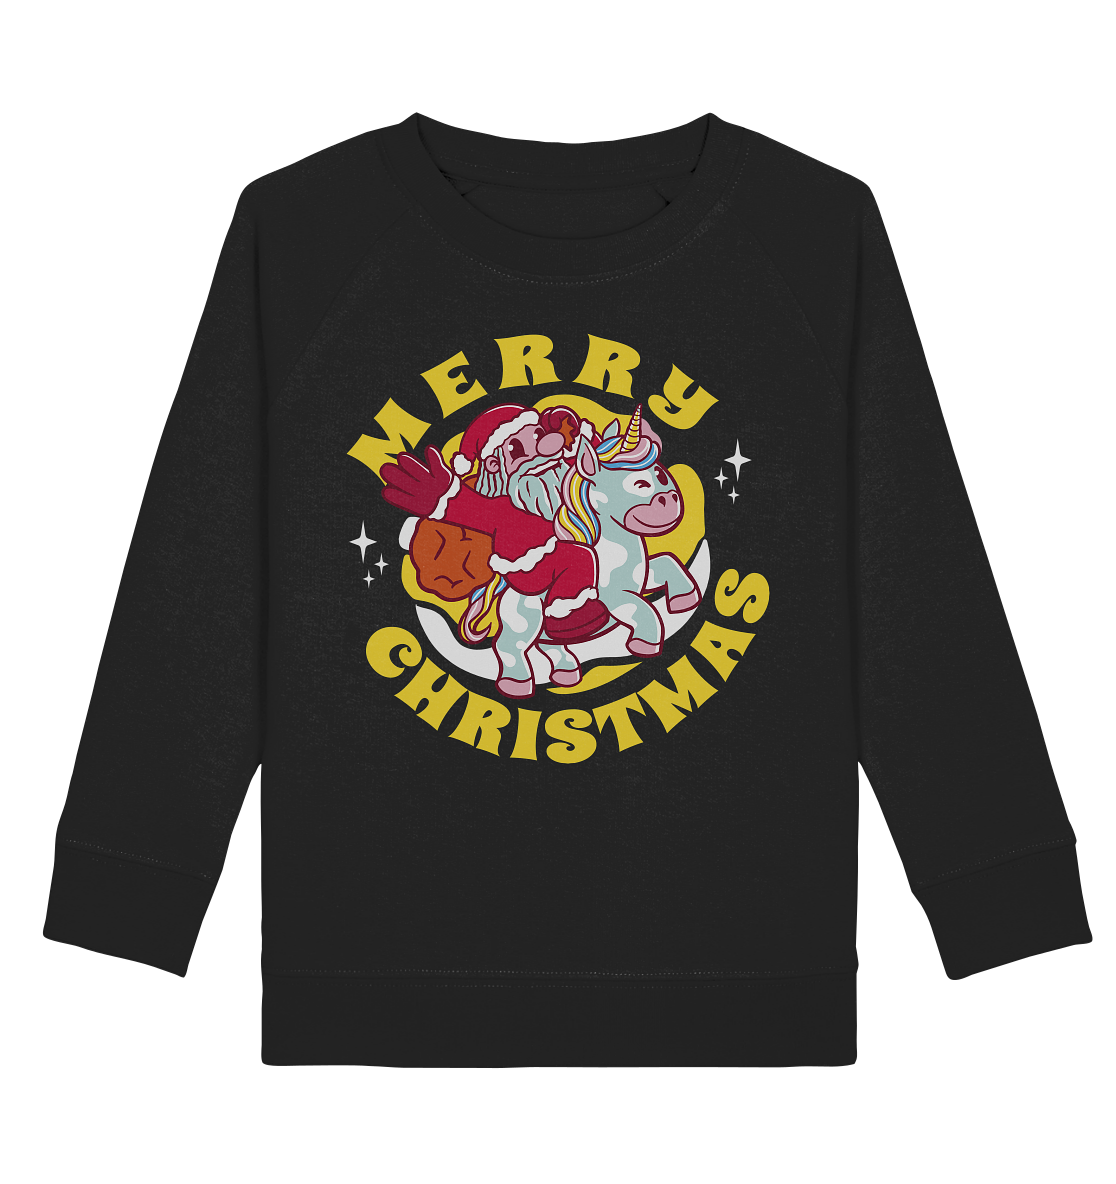 Riding Santa Claus, Merry Christmas, Merry Christmas - Kids Organic Sweatshirt